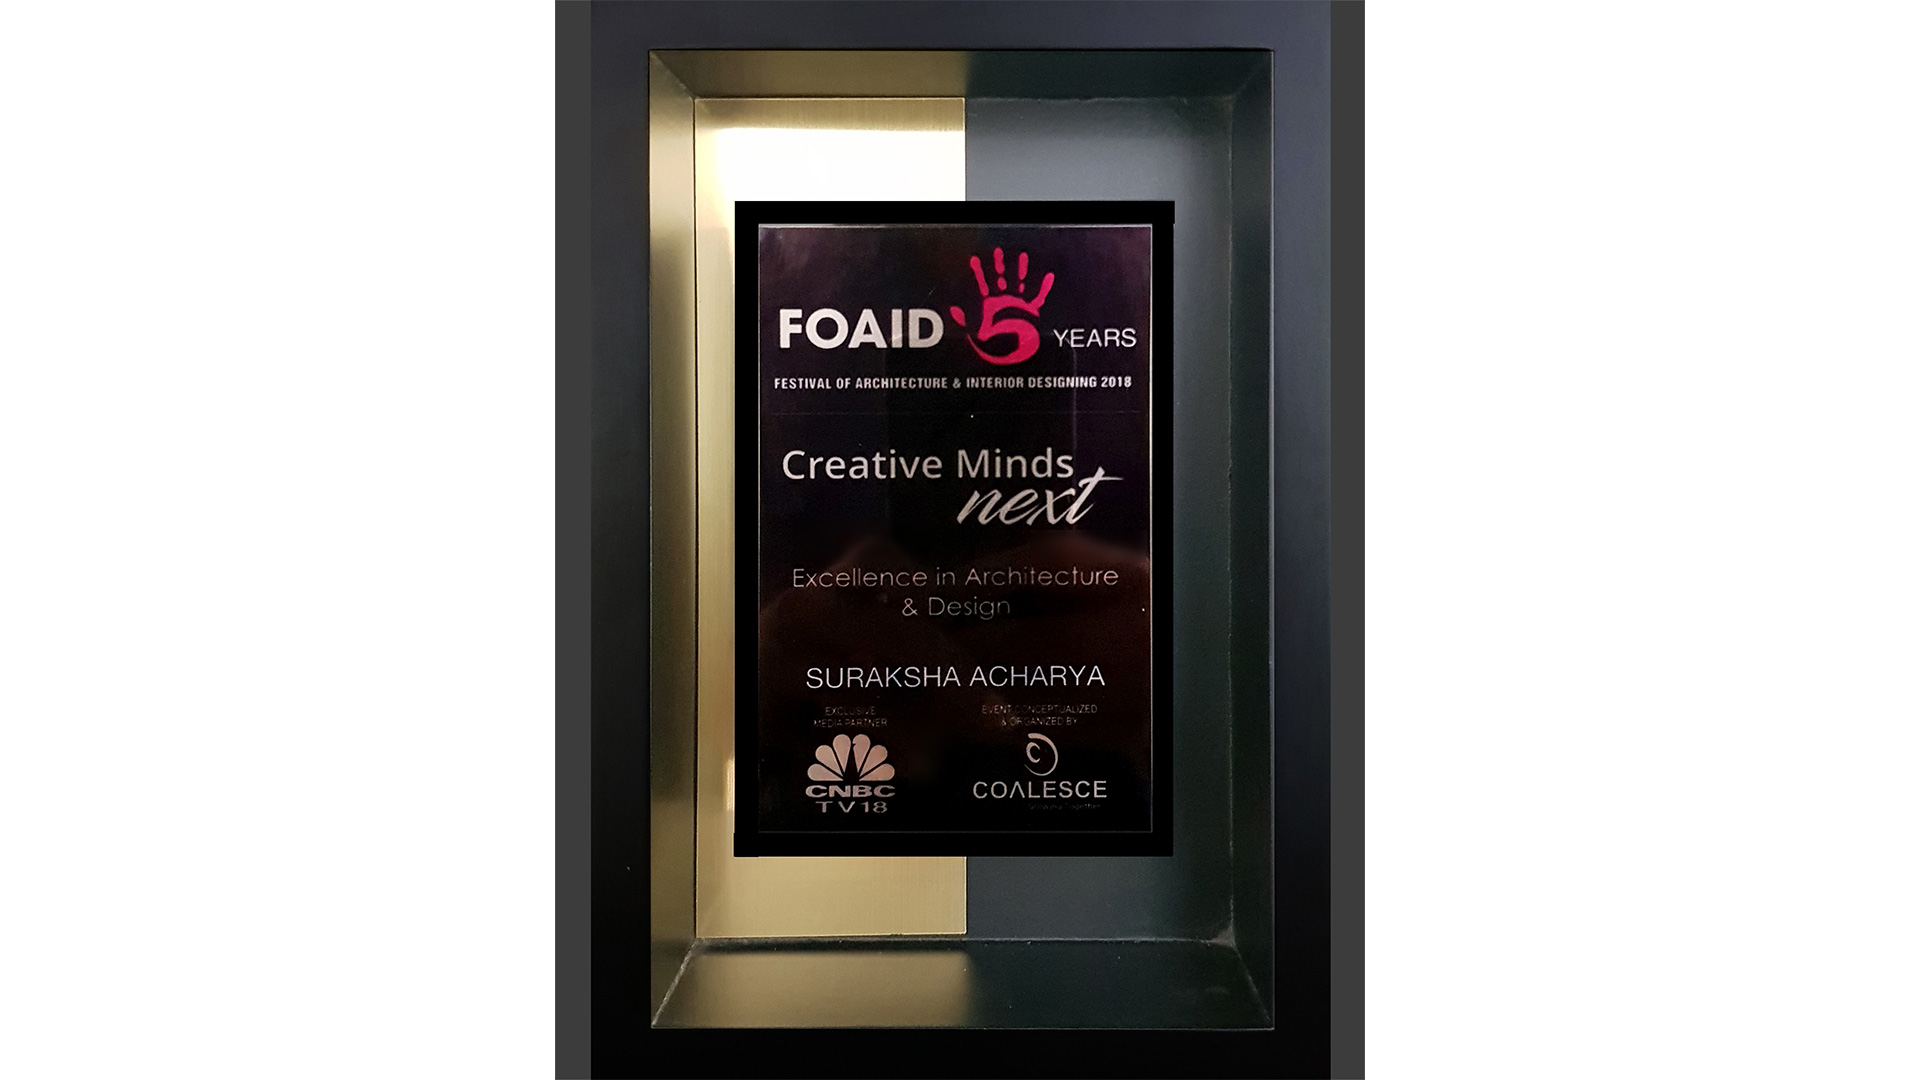 FOAID New Delhi | Creative Minds Next challenge